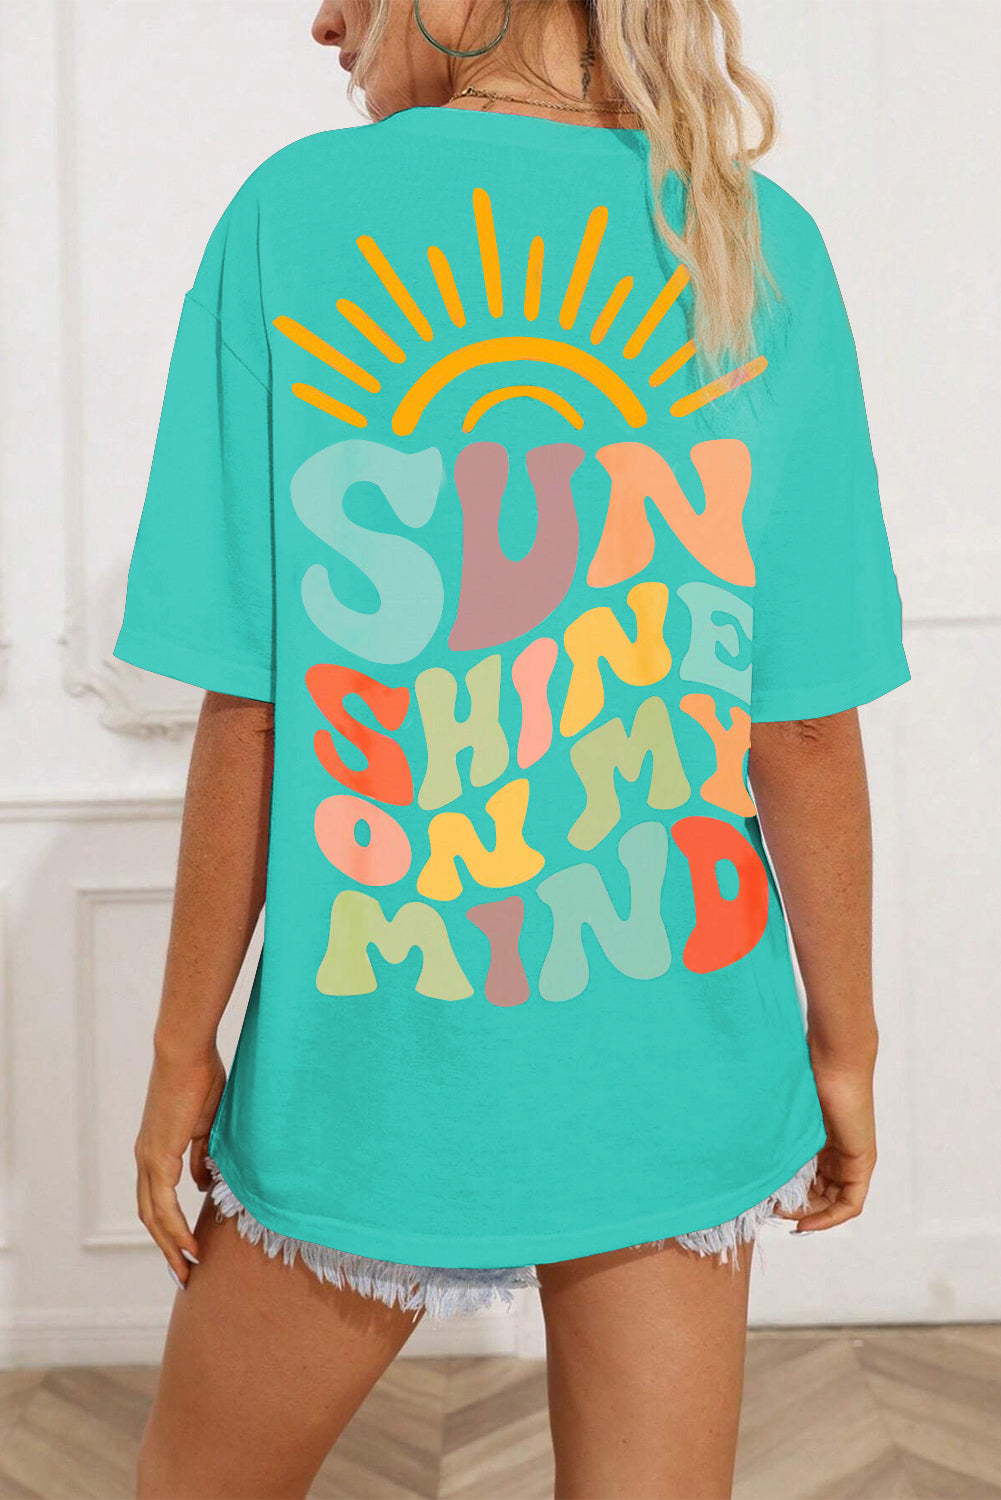 SUN SHINE ON MY MIND Round Neck T-Shirt - bertofonsi